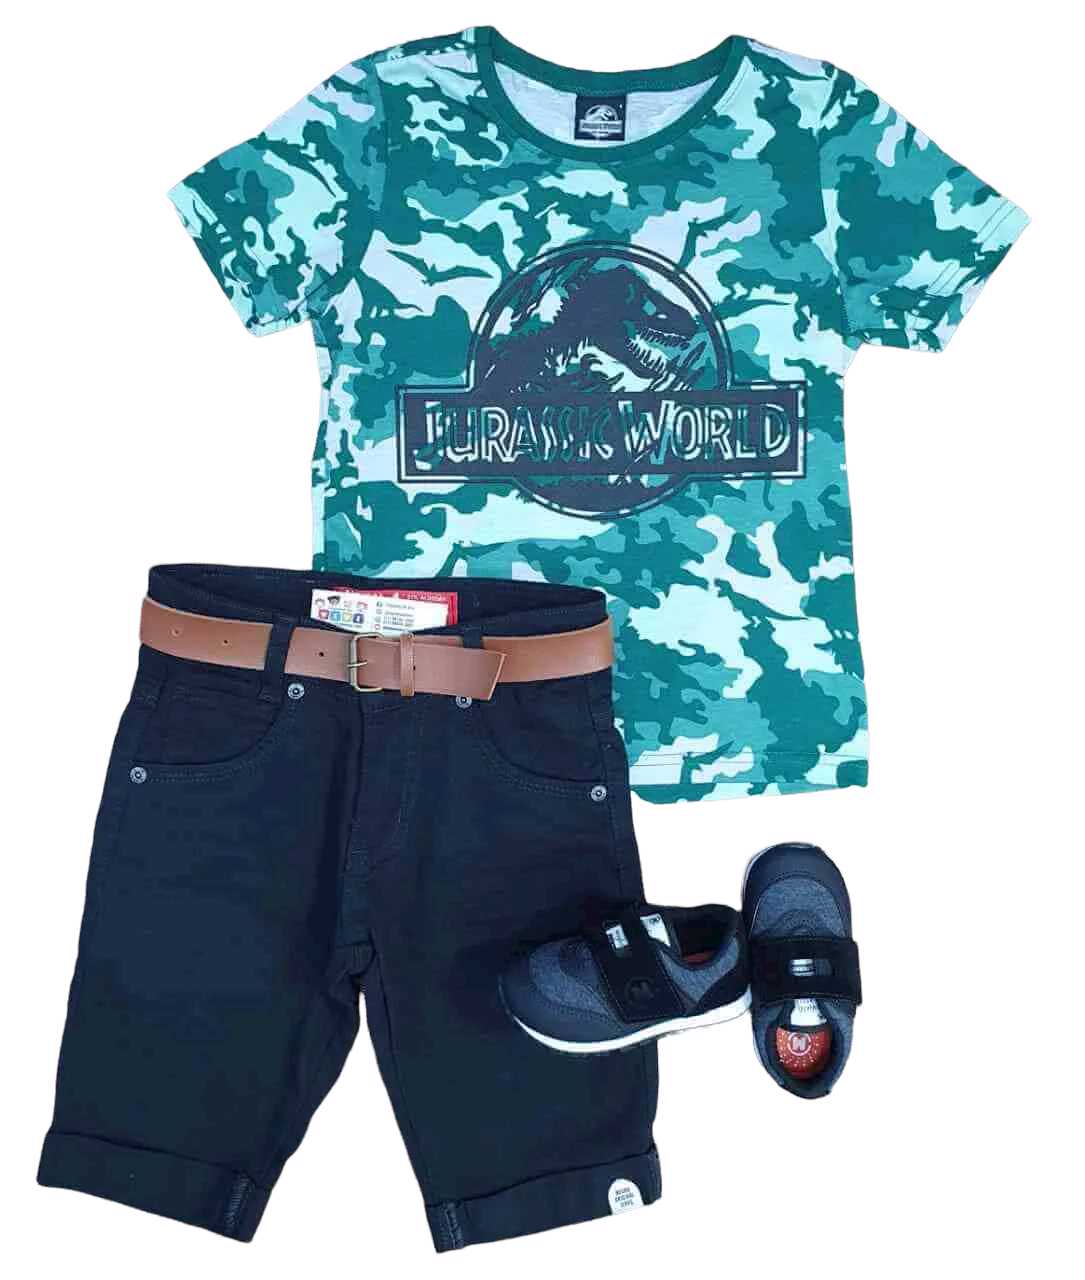 Bermuda com Camiseta Jurassic World Infantil  - Lojinha da Vivi